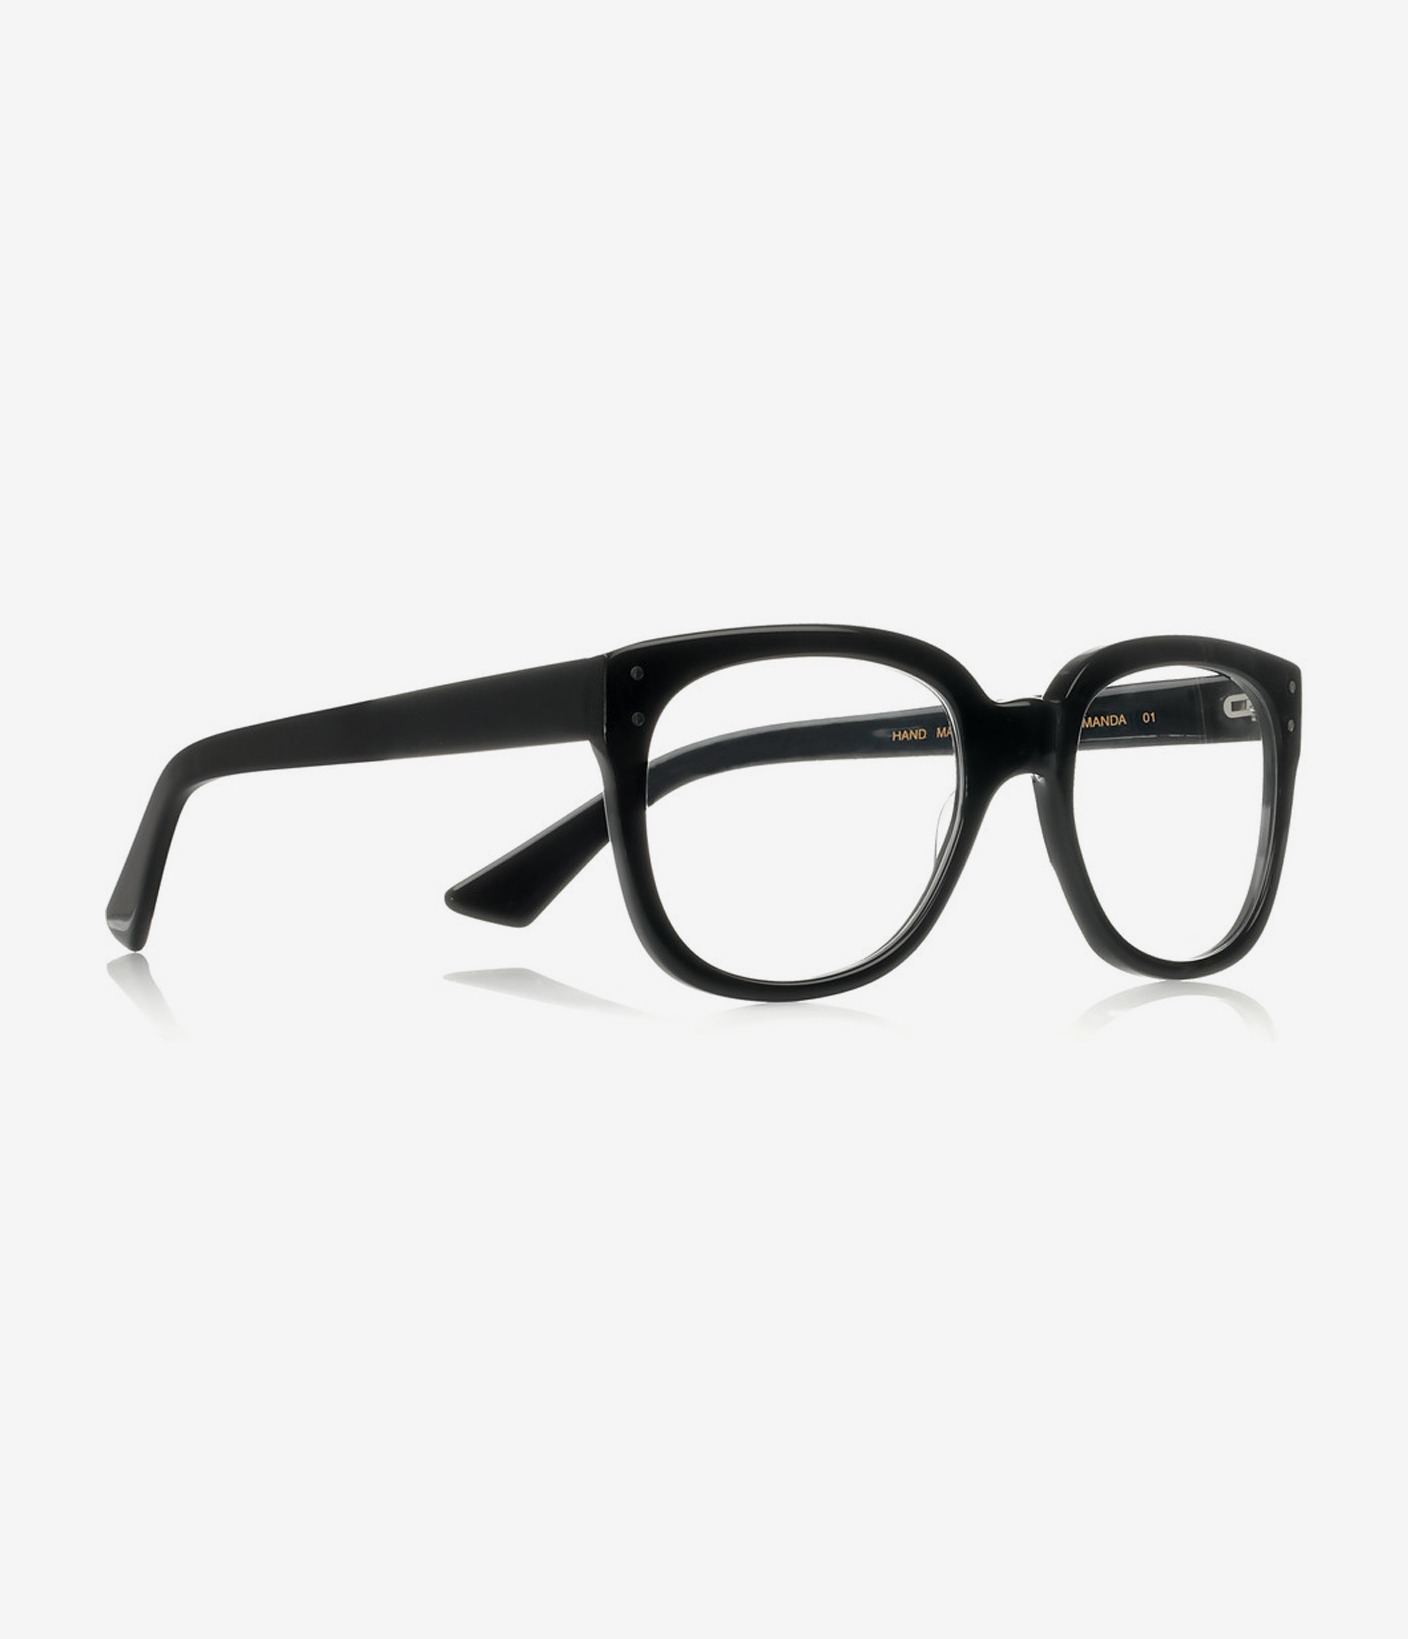 Black Oversized Square Glasses